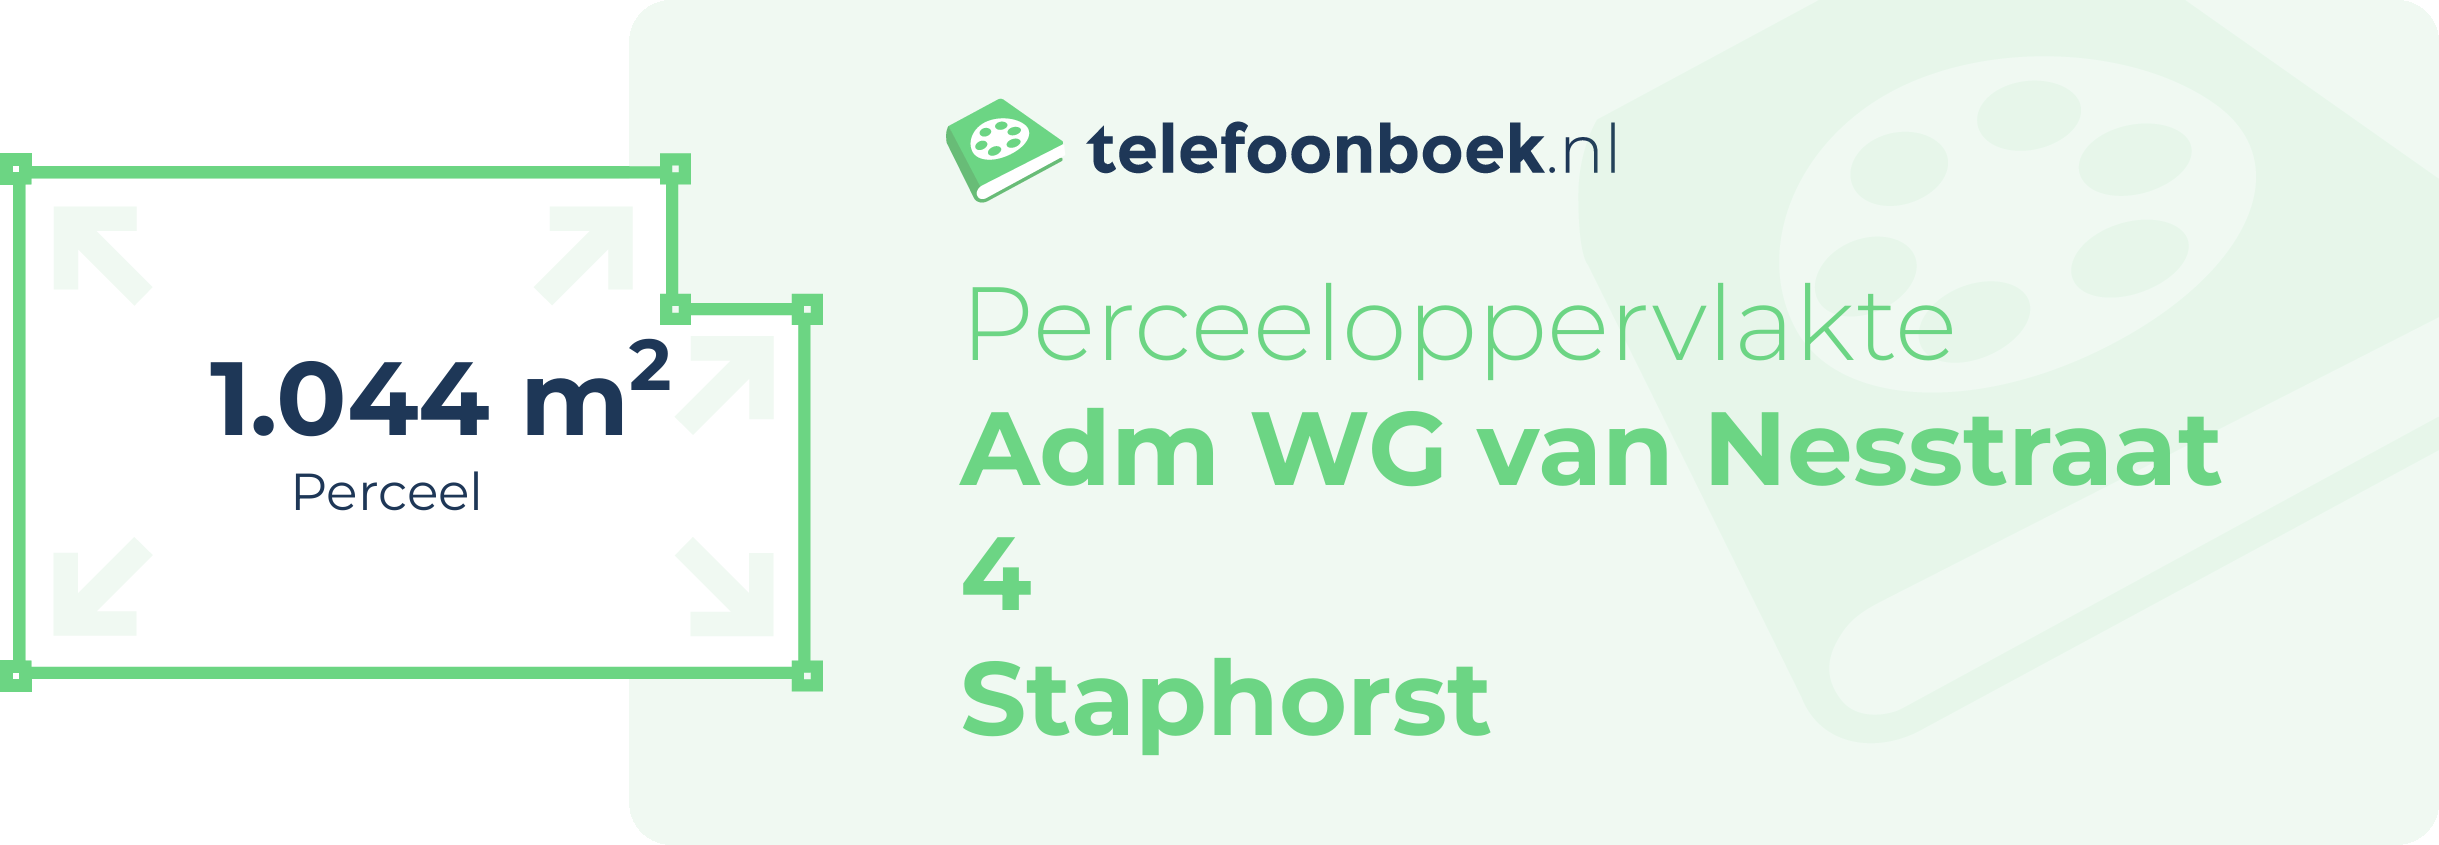 Perceeloppervlakte Adm WG Van Nesstraat 4 Staphorst